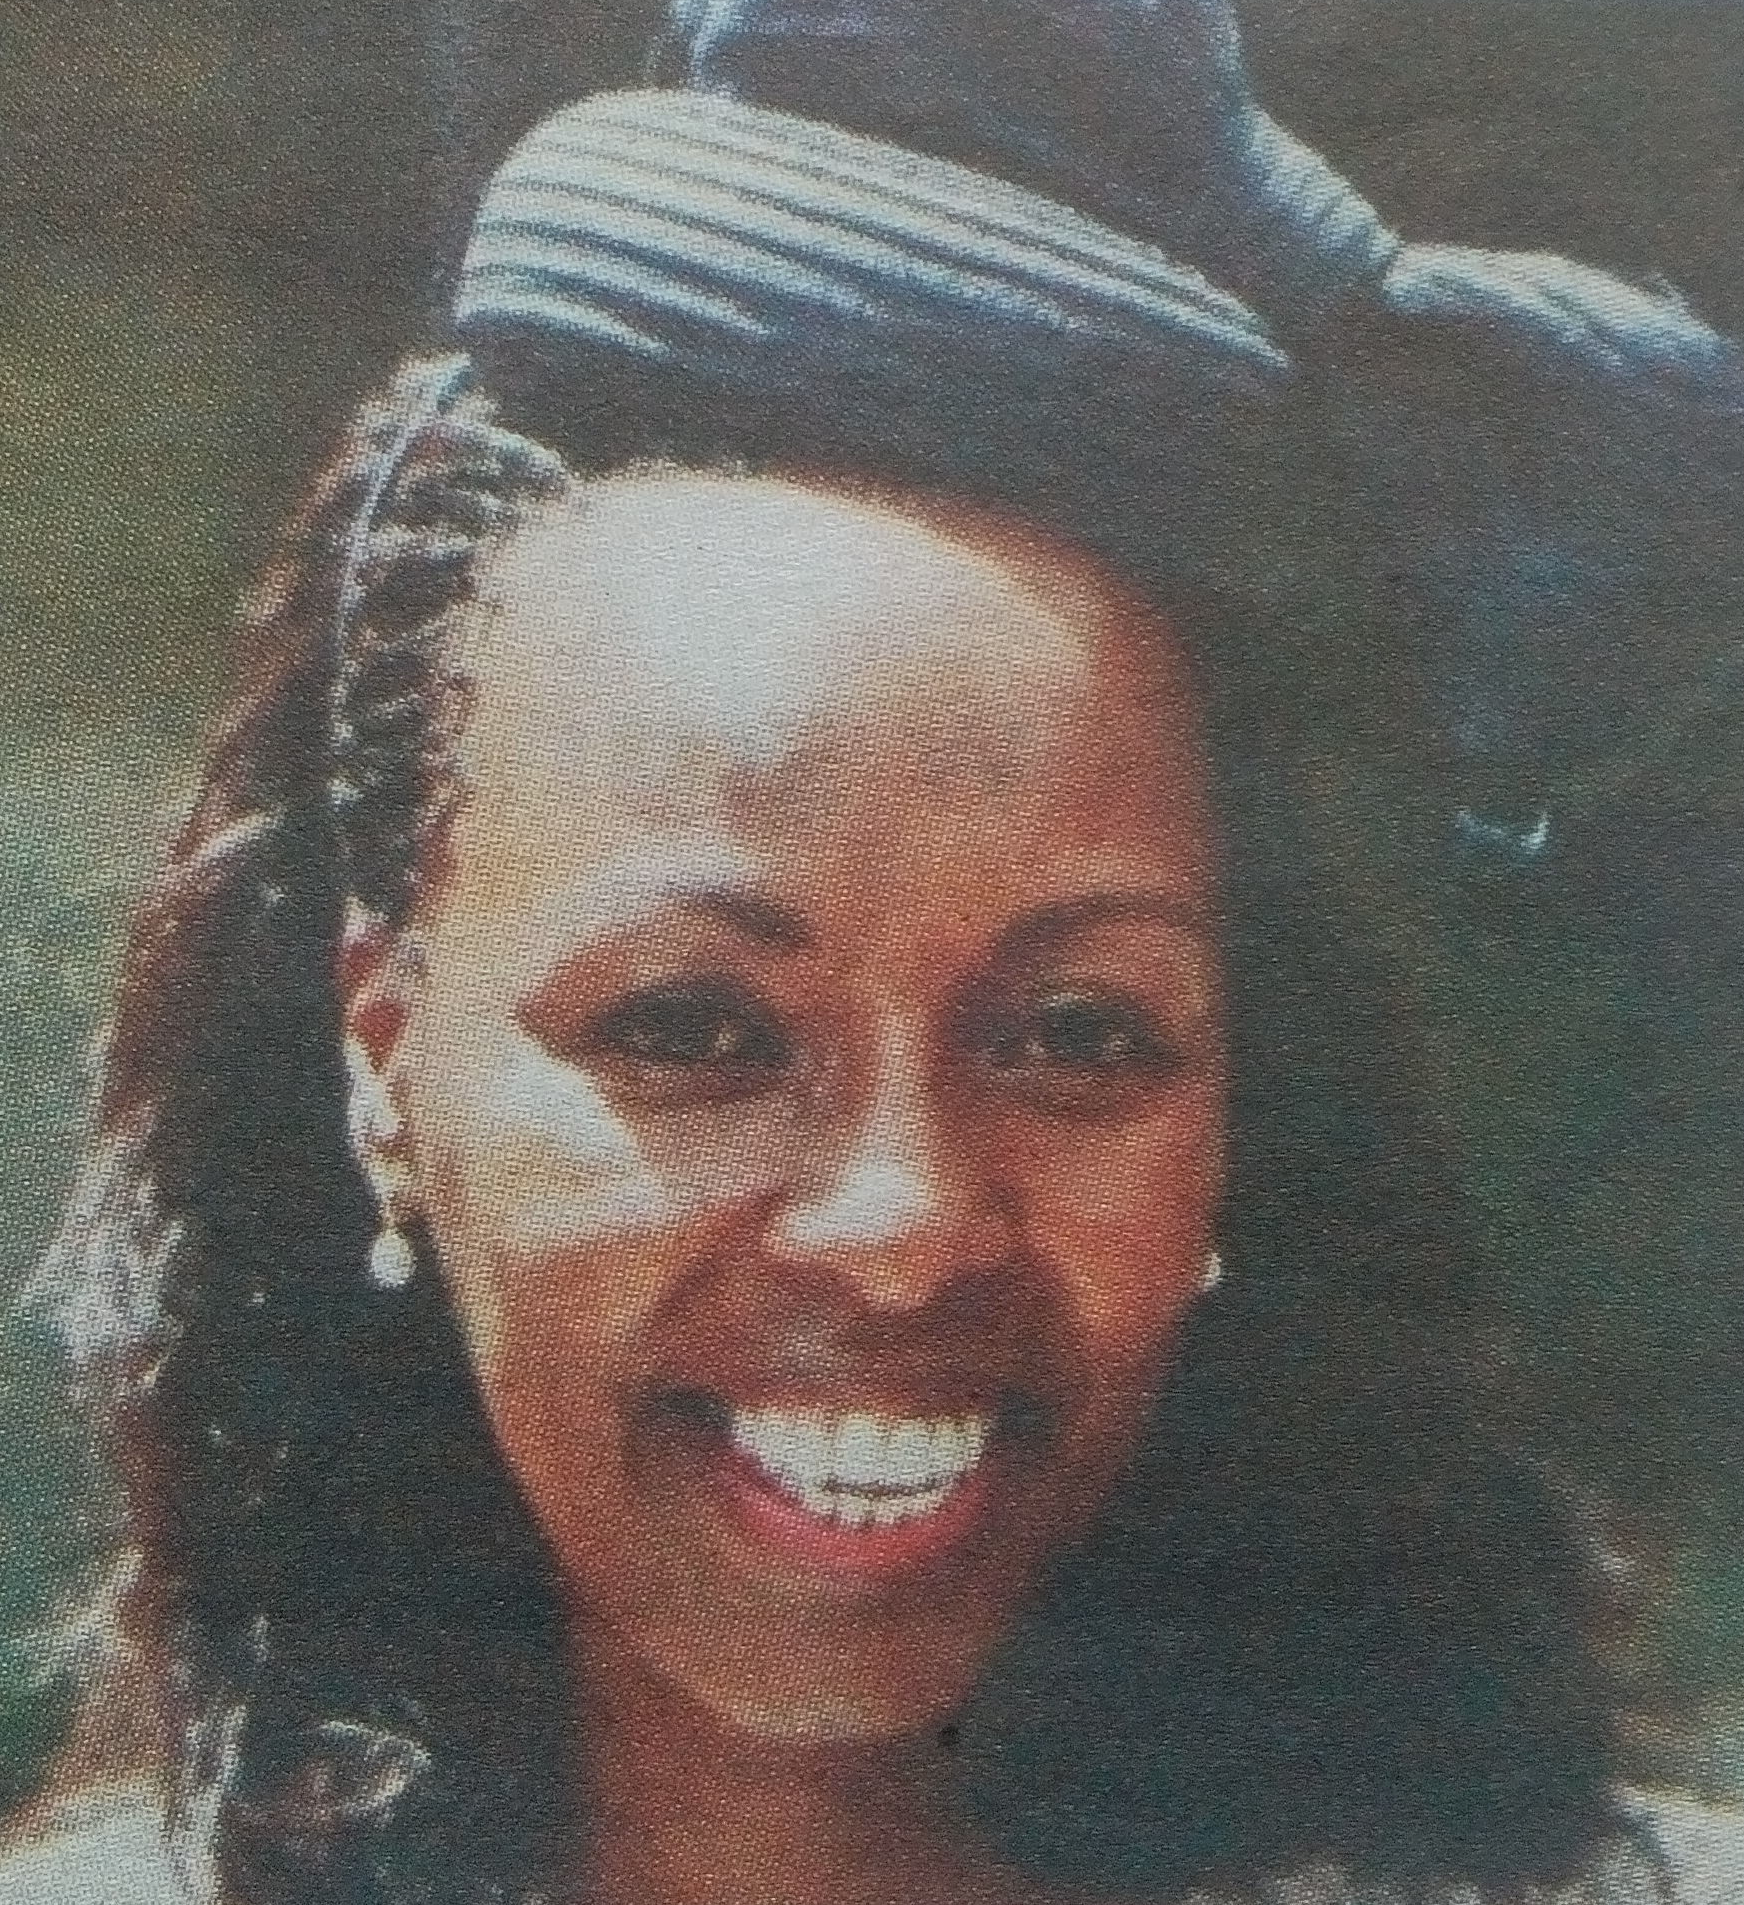 Obituary Image of CAROLINE WAIRIMU WANJIHIA